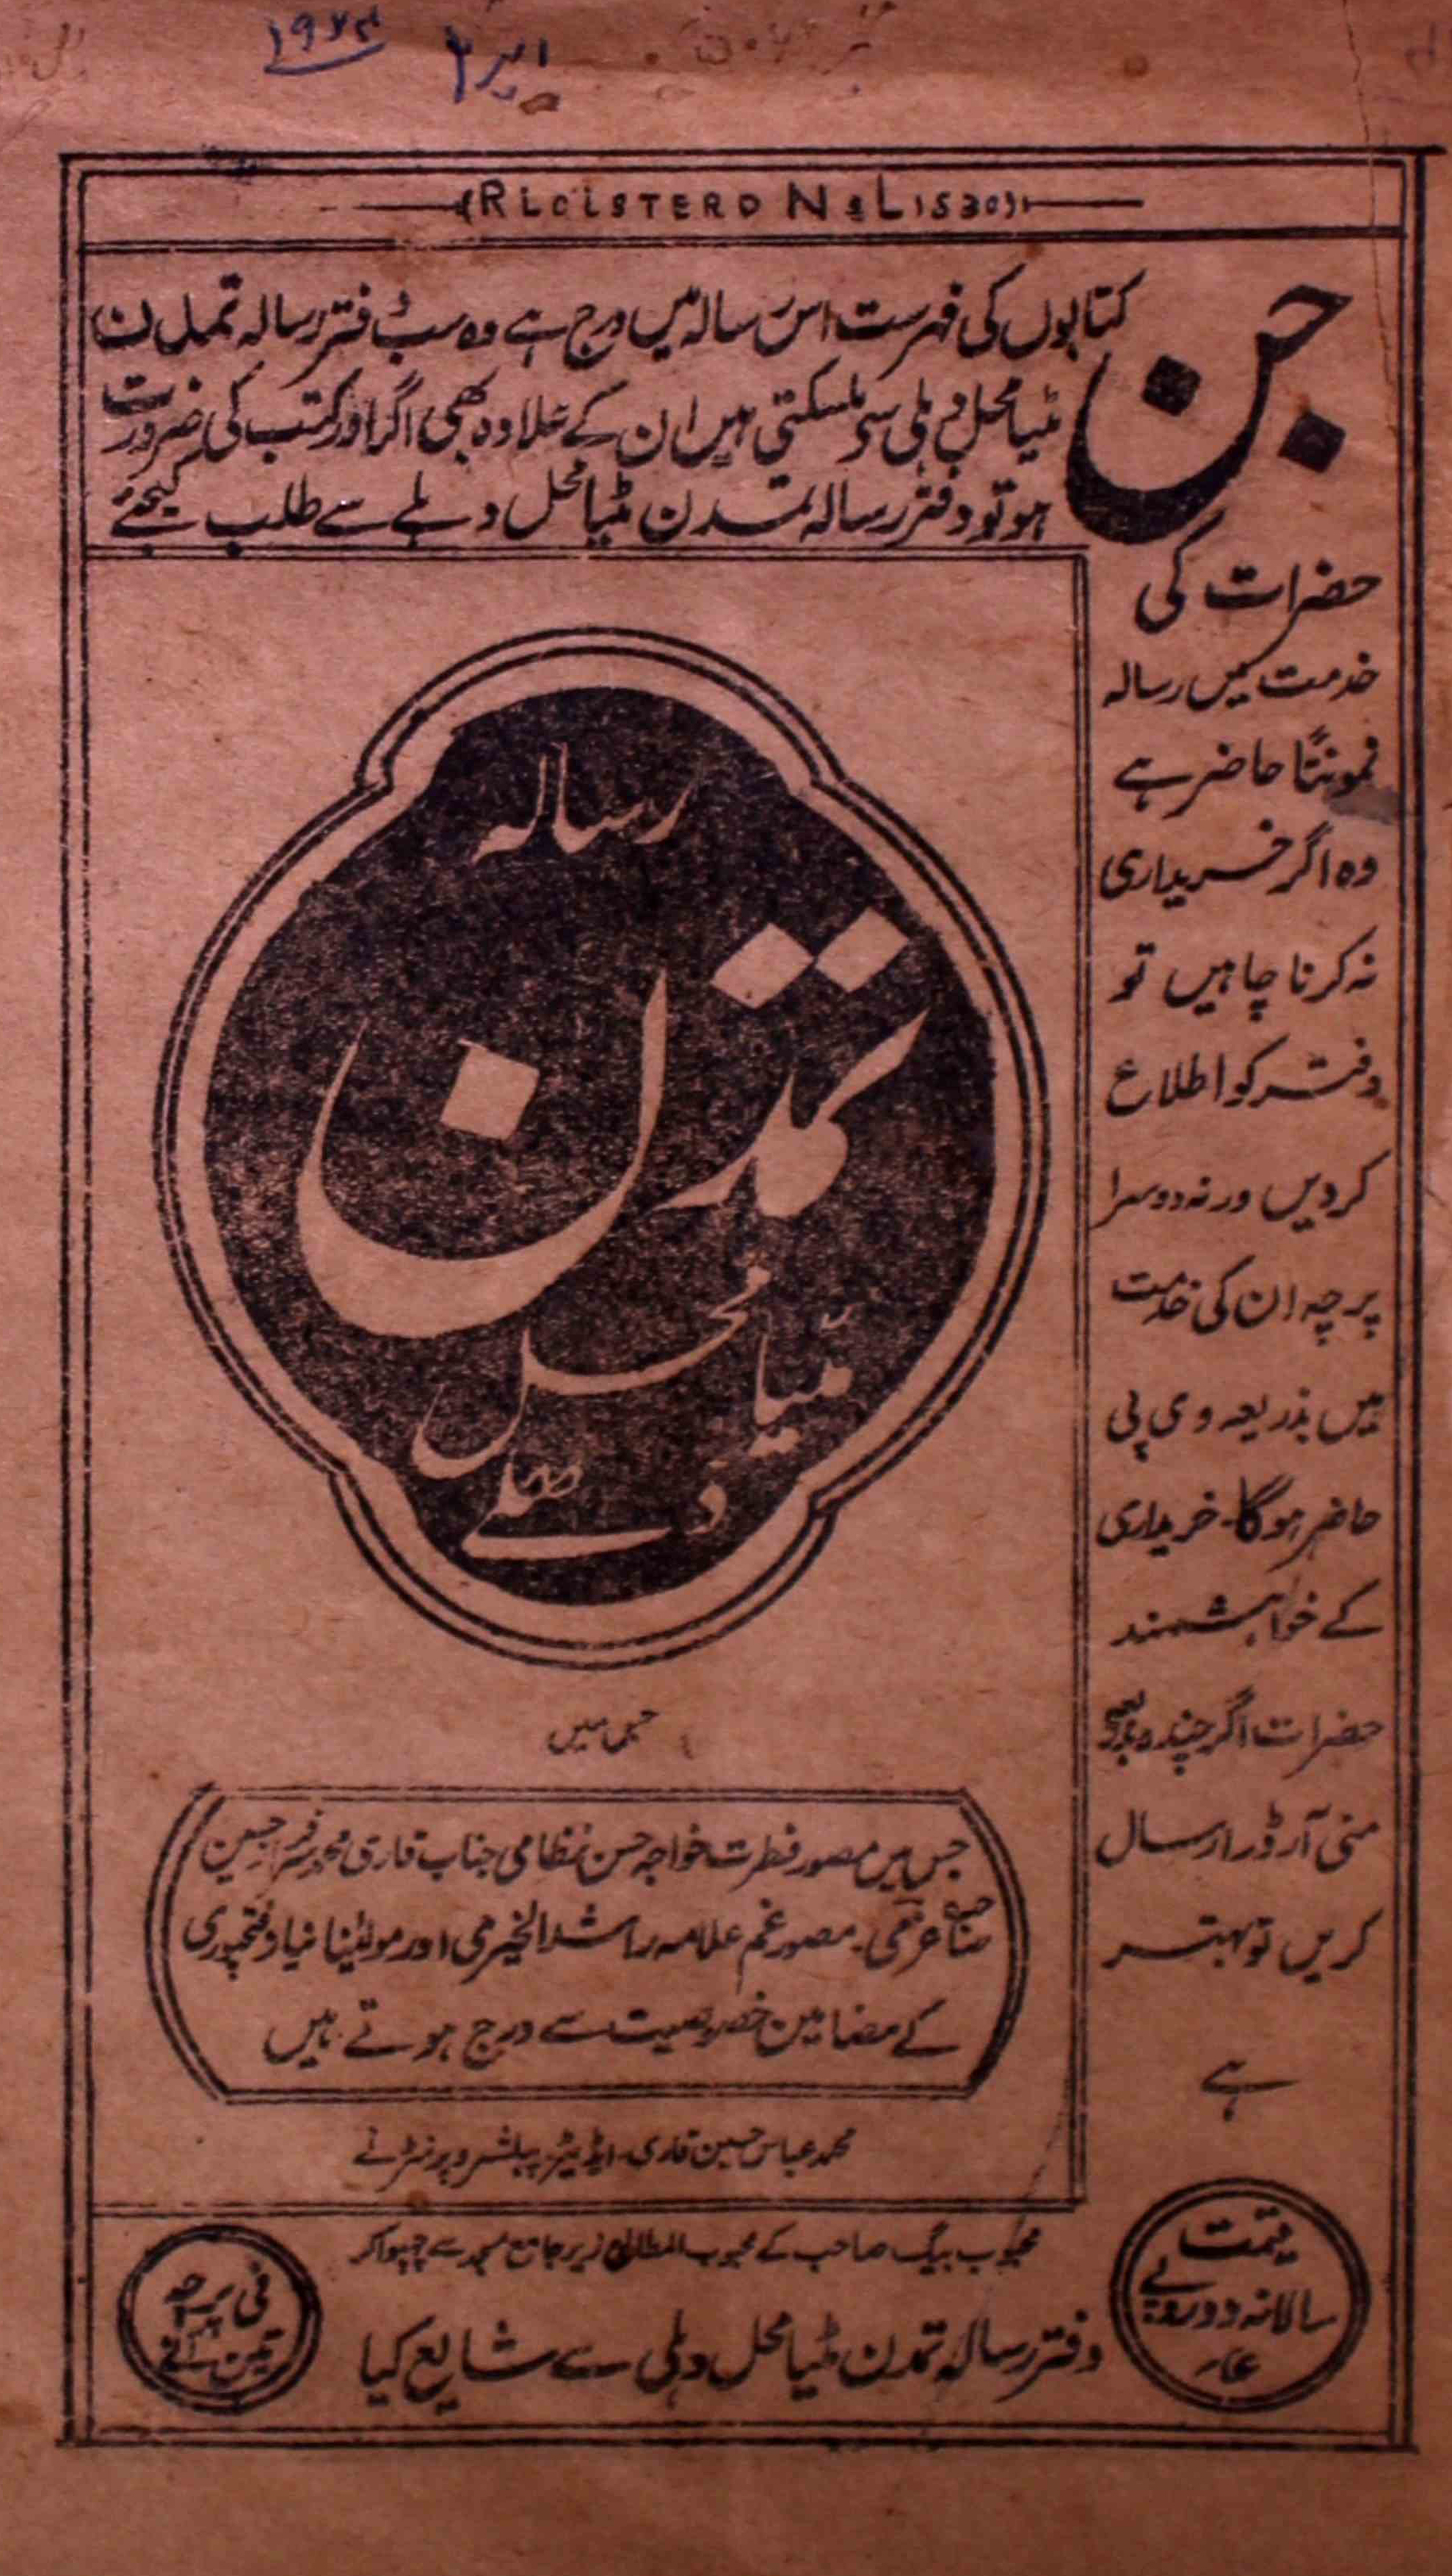 tamaddun-shumara-number-004-mohammad-abbas-husain-qari-magazines